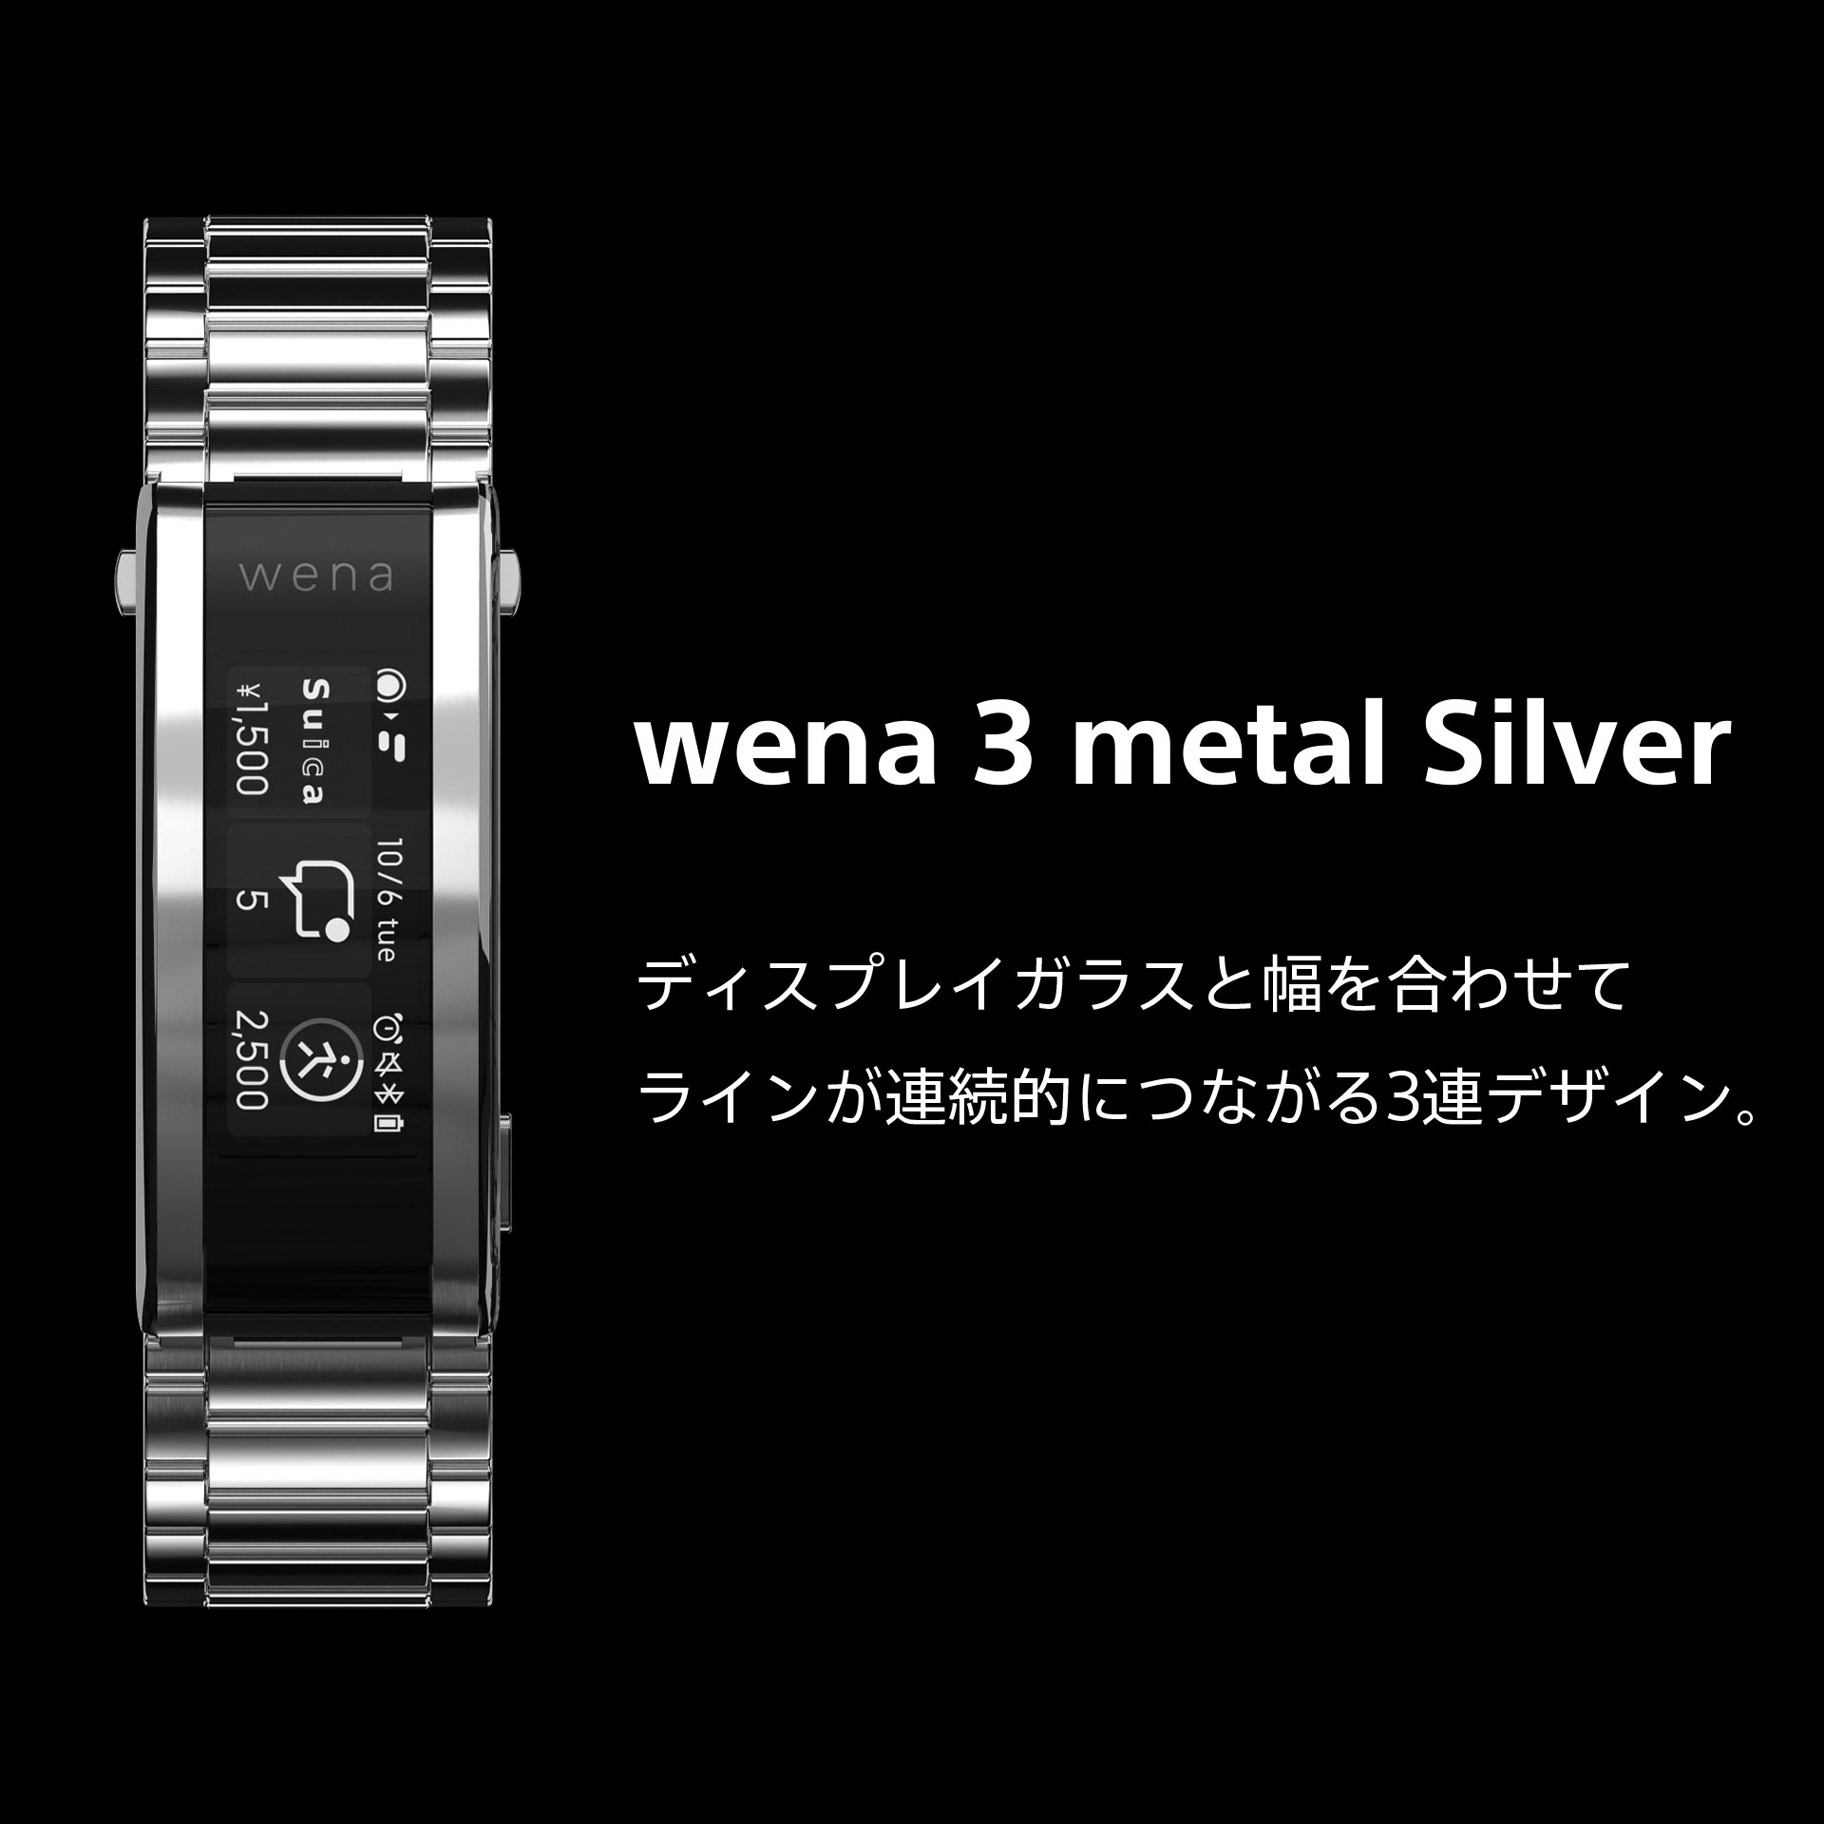 wena3 metal silver WNW-B21A/S | www.innoveering.net